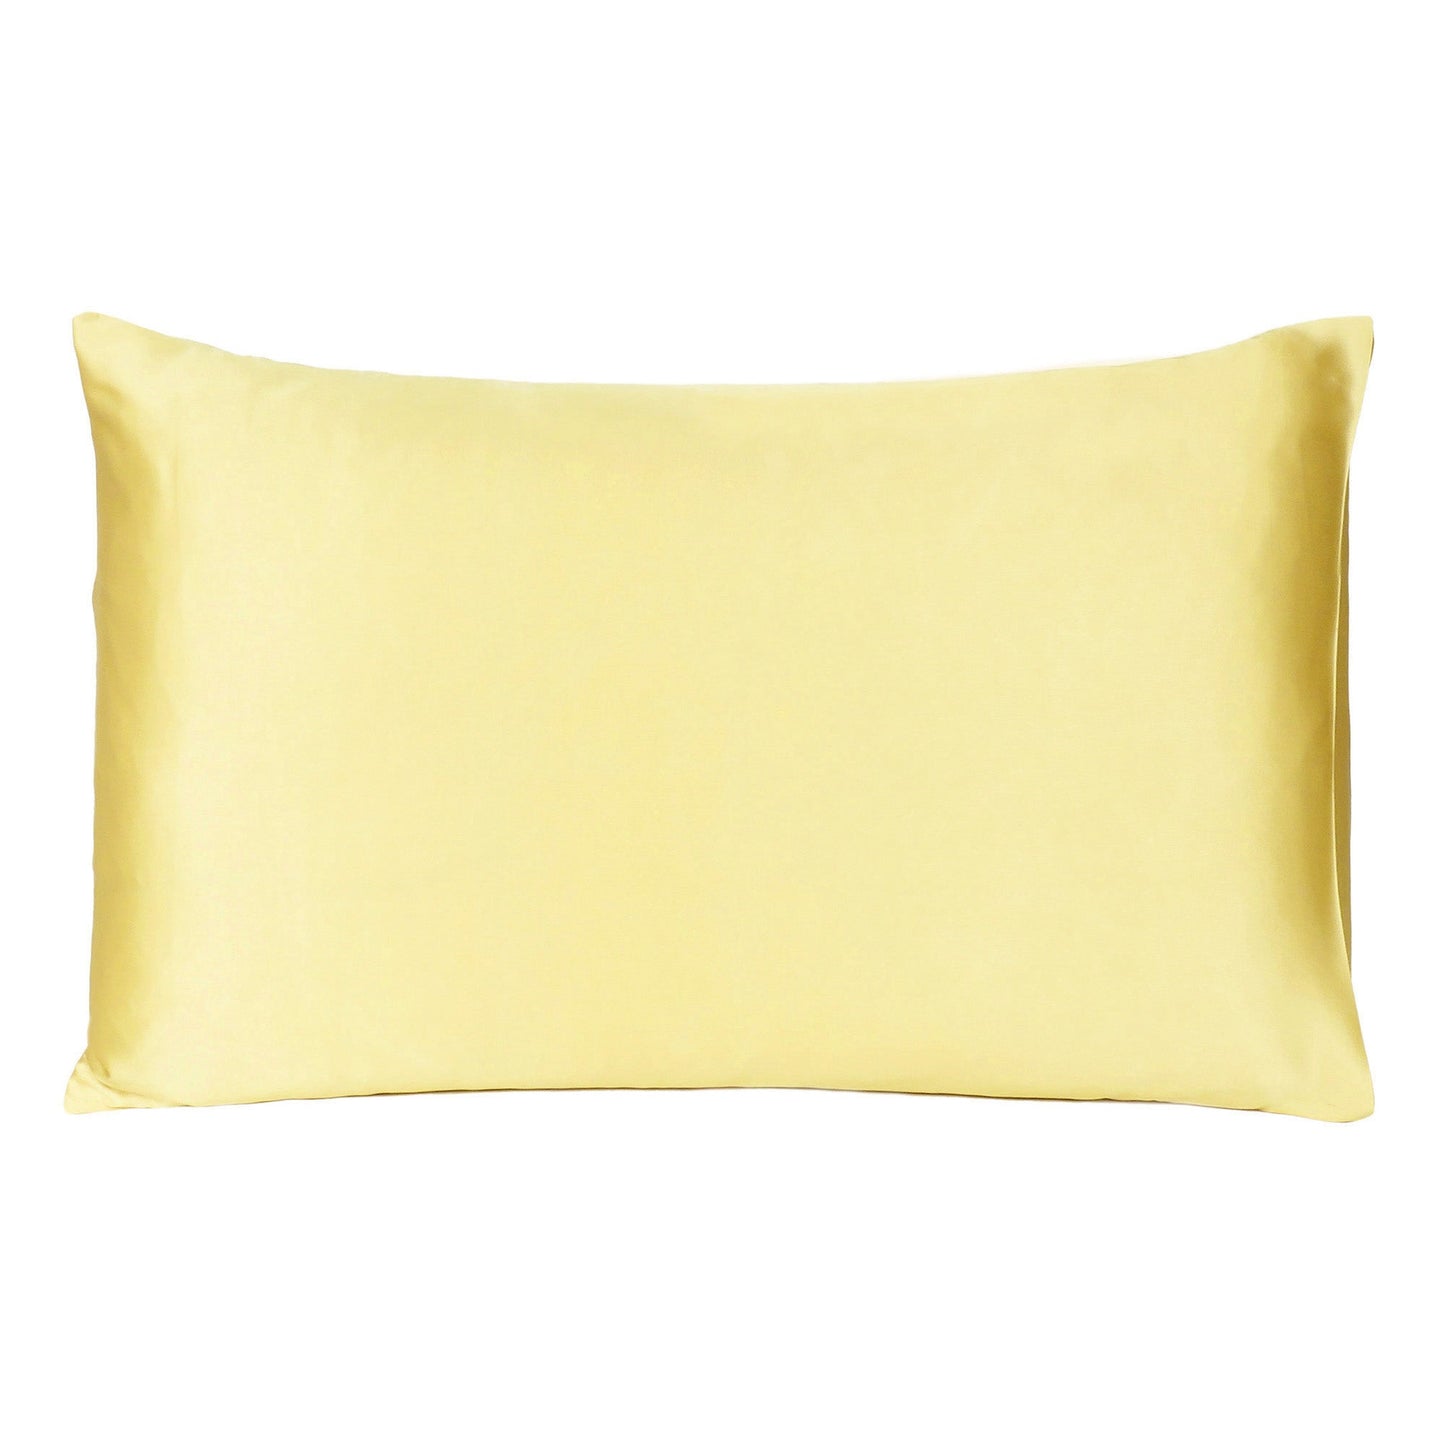 Luxury Soft Plain Satin Silk Pillowcases in Set of 2 - Parsnip Cream